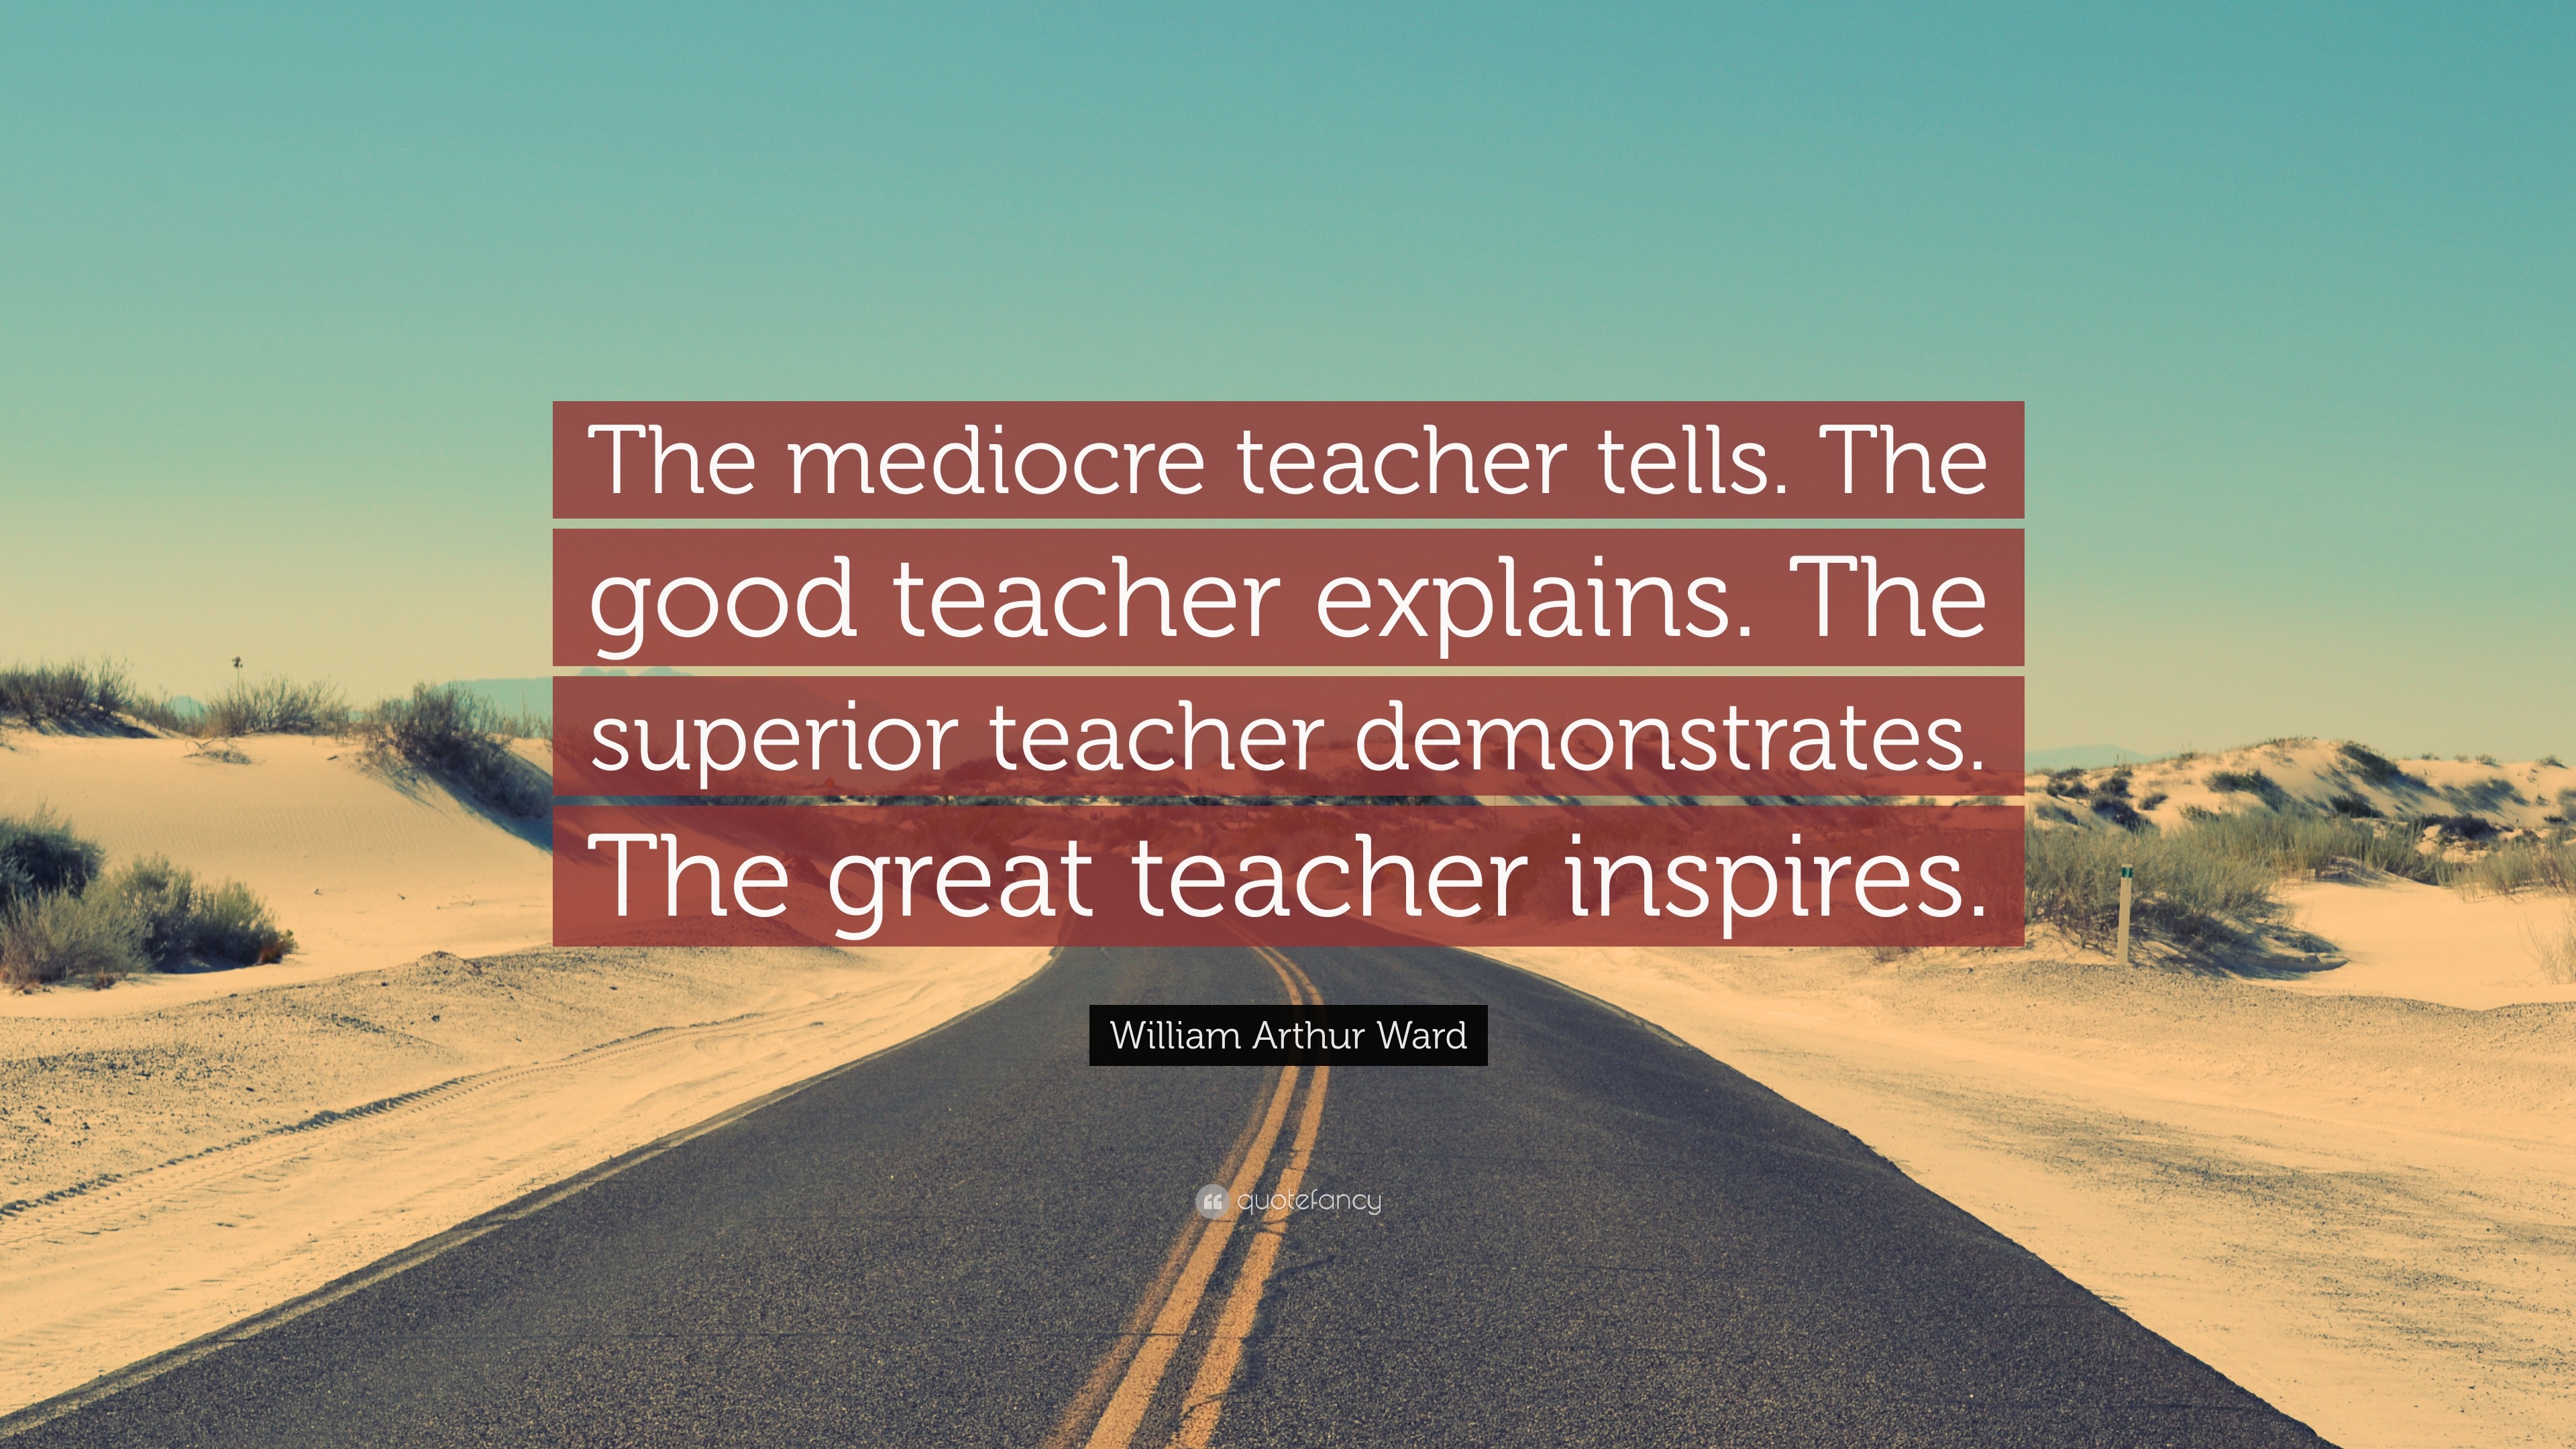 William Arthur Ward Quote: “The mediocre teacher tells. The good